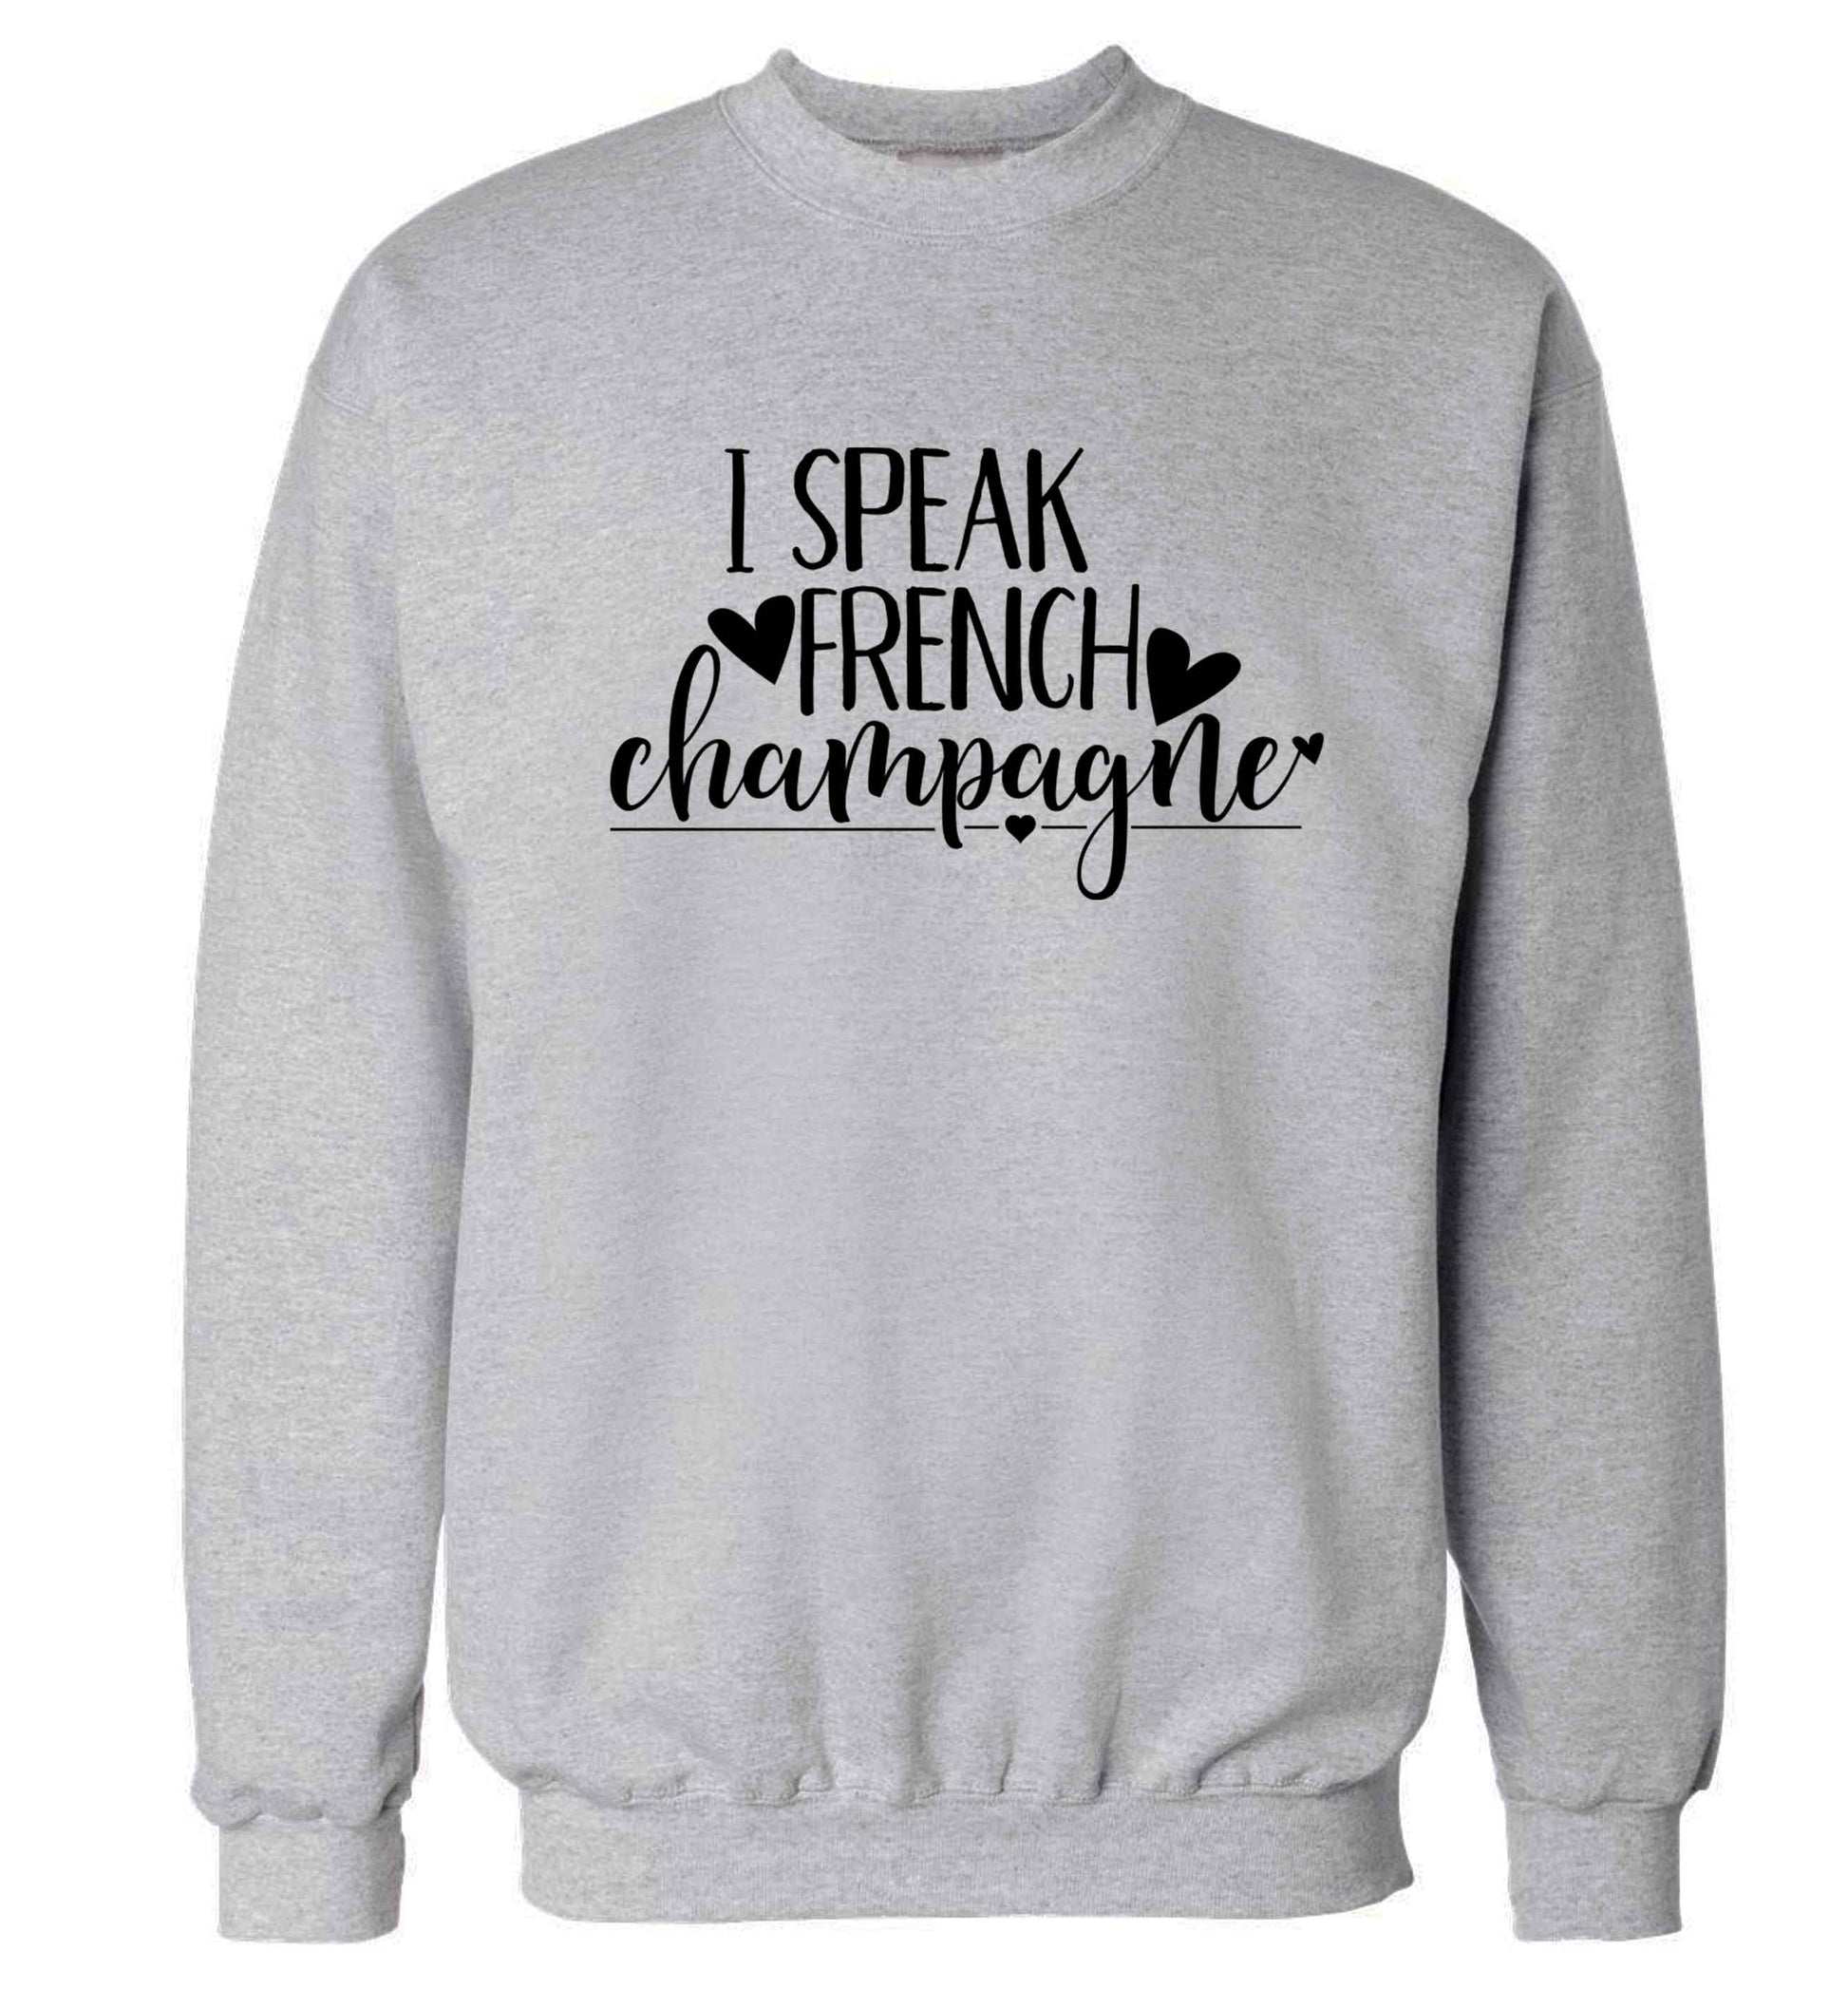 I speak french champagne Adult's unisex grey Sweater 2XL